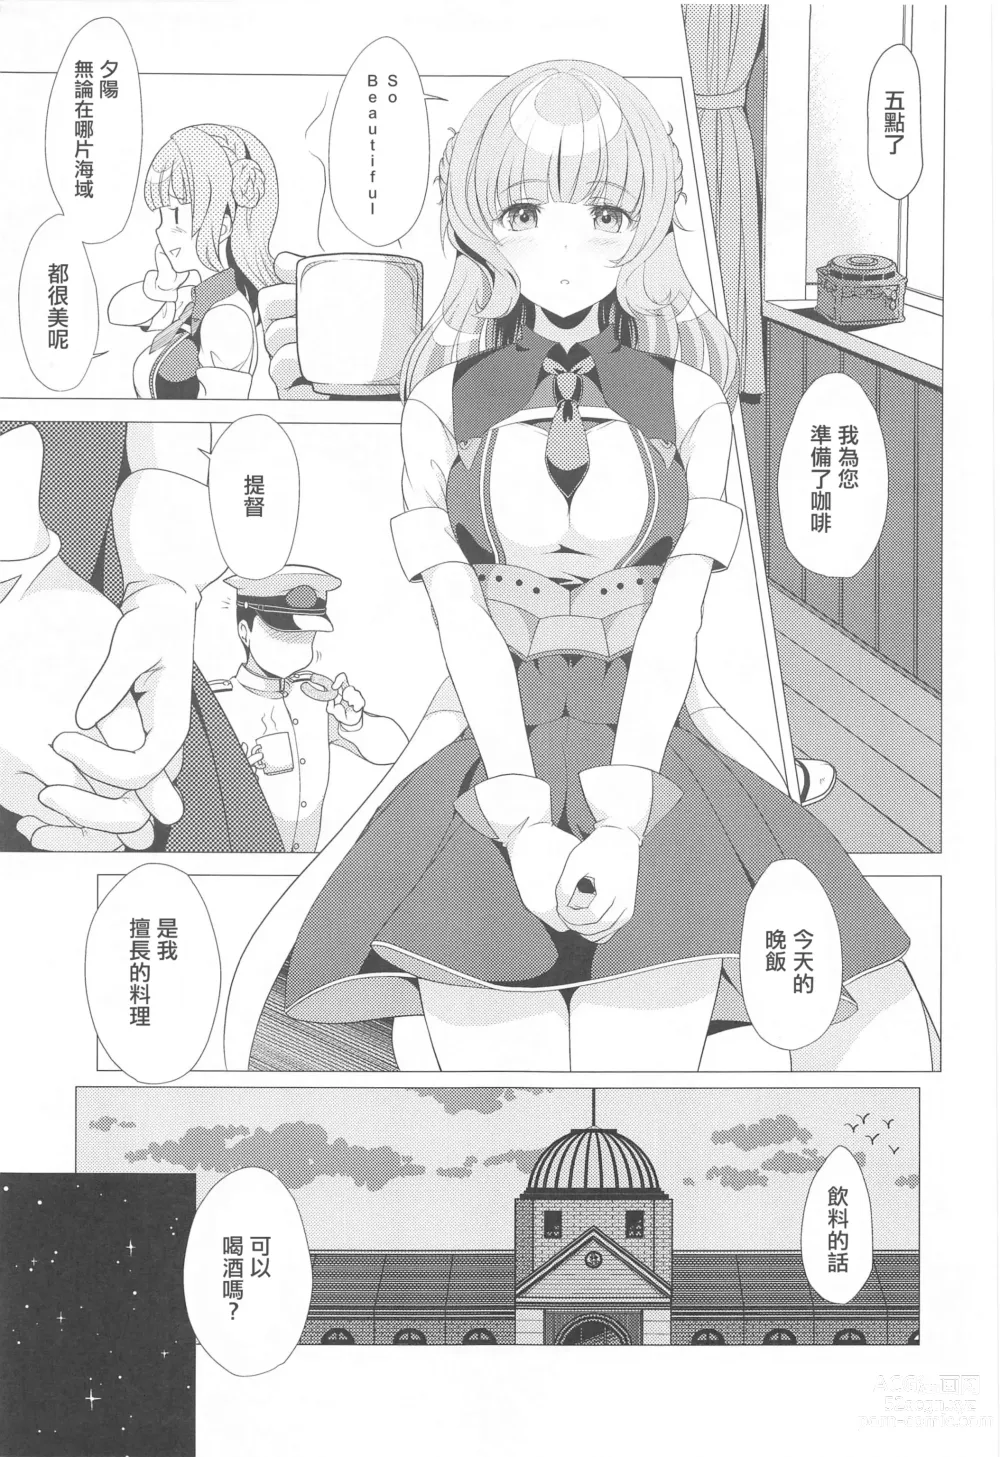 Page 4 of doujinshi Ren Ren Ranger